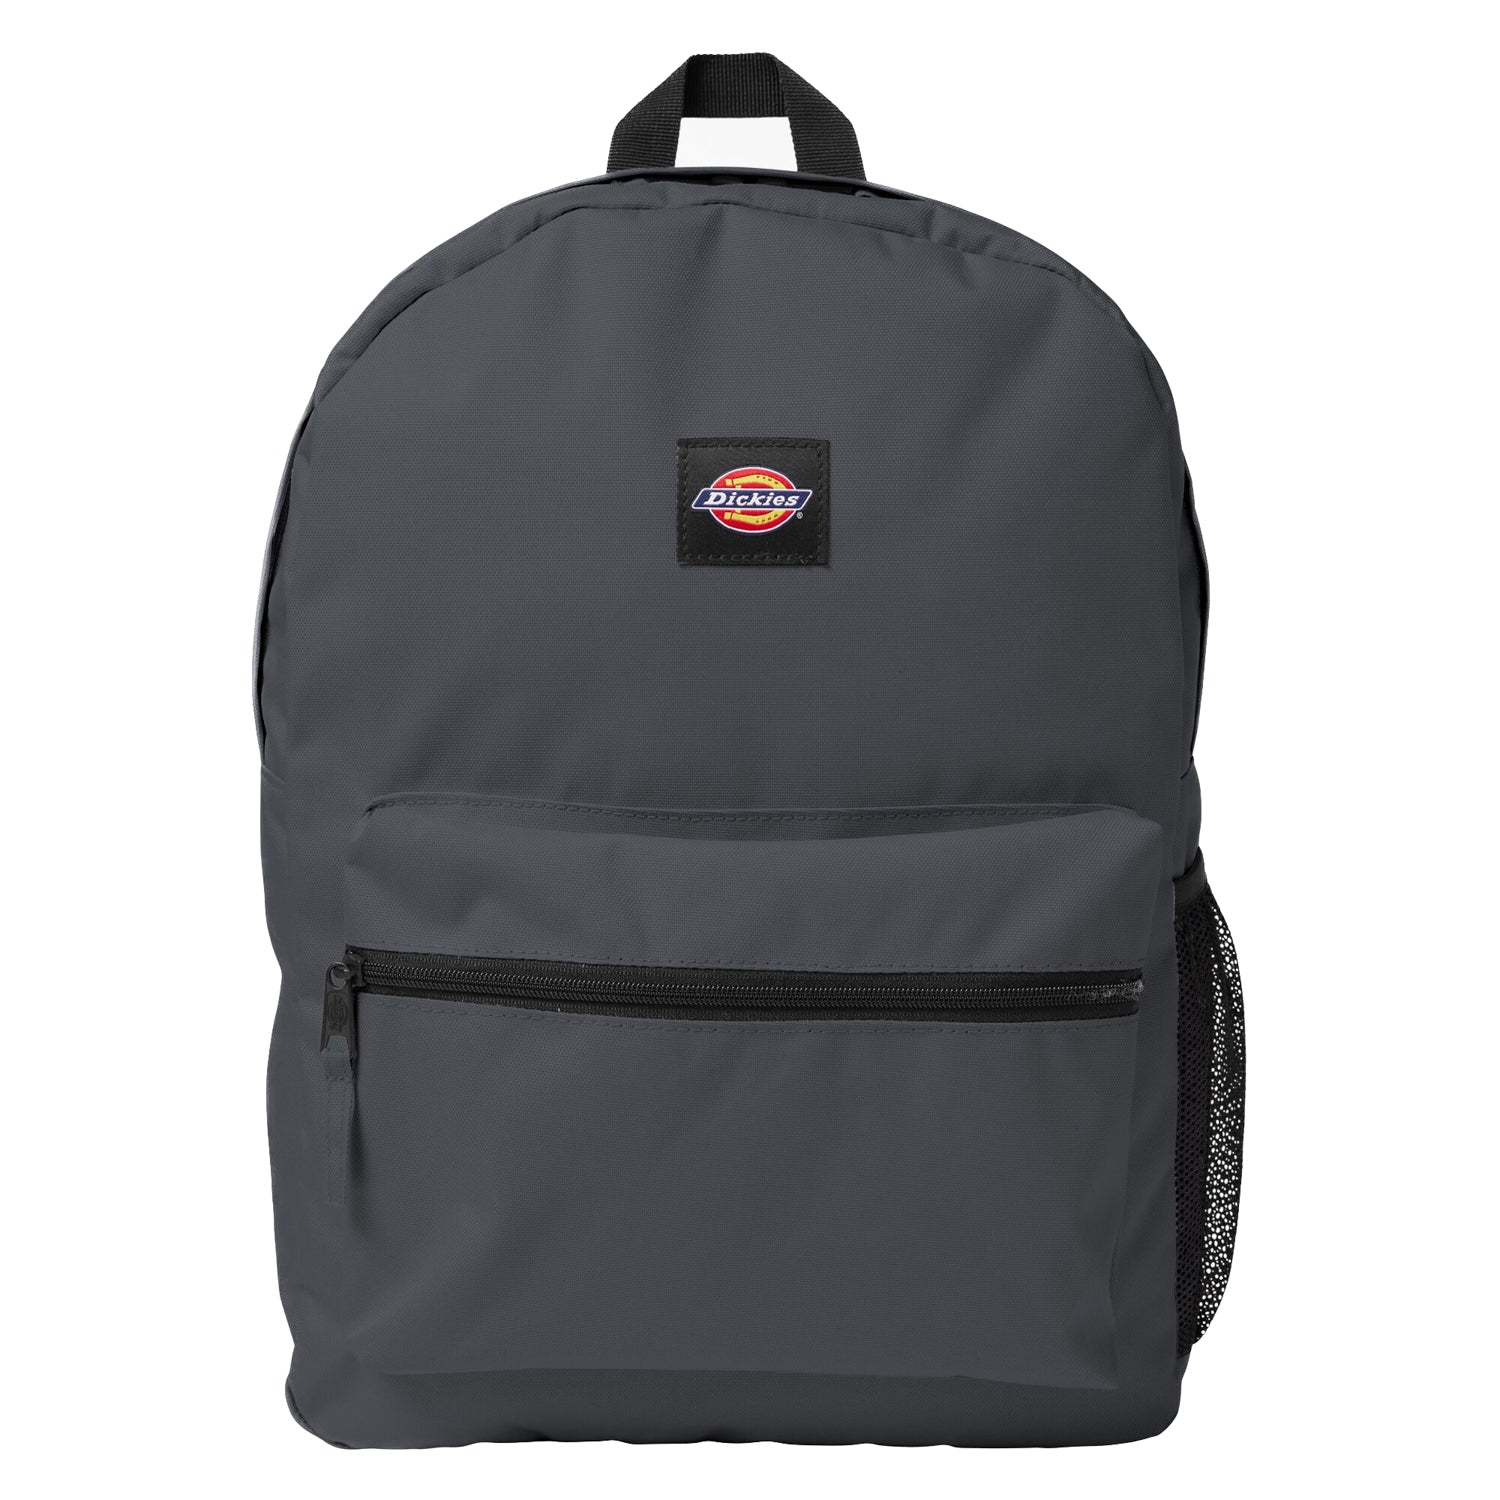 Woven Basic Backpack - Charcoal Gray